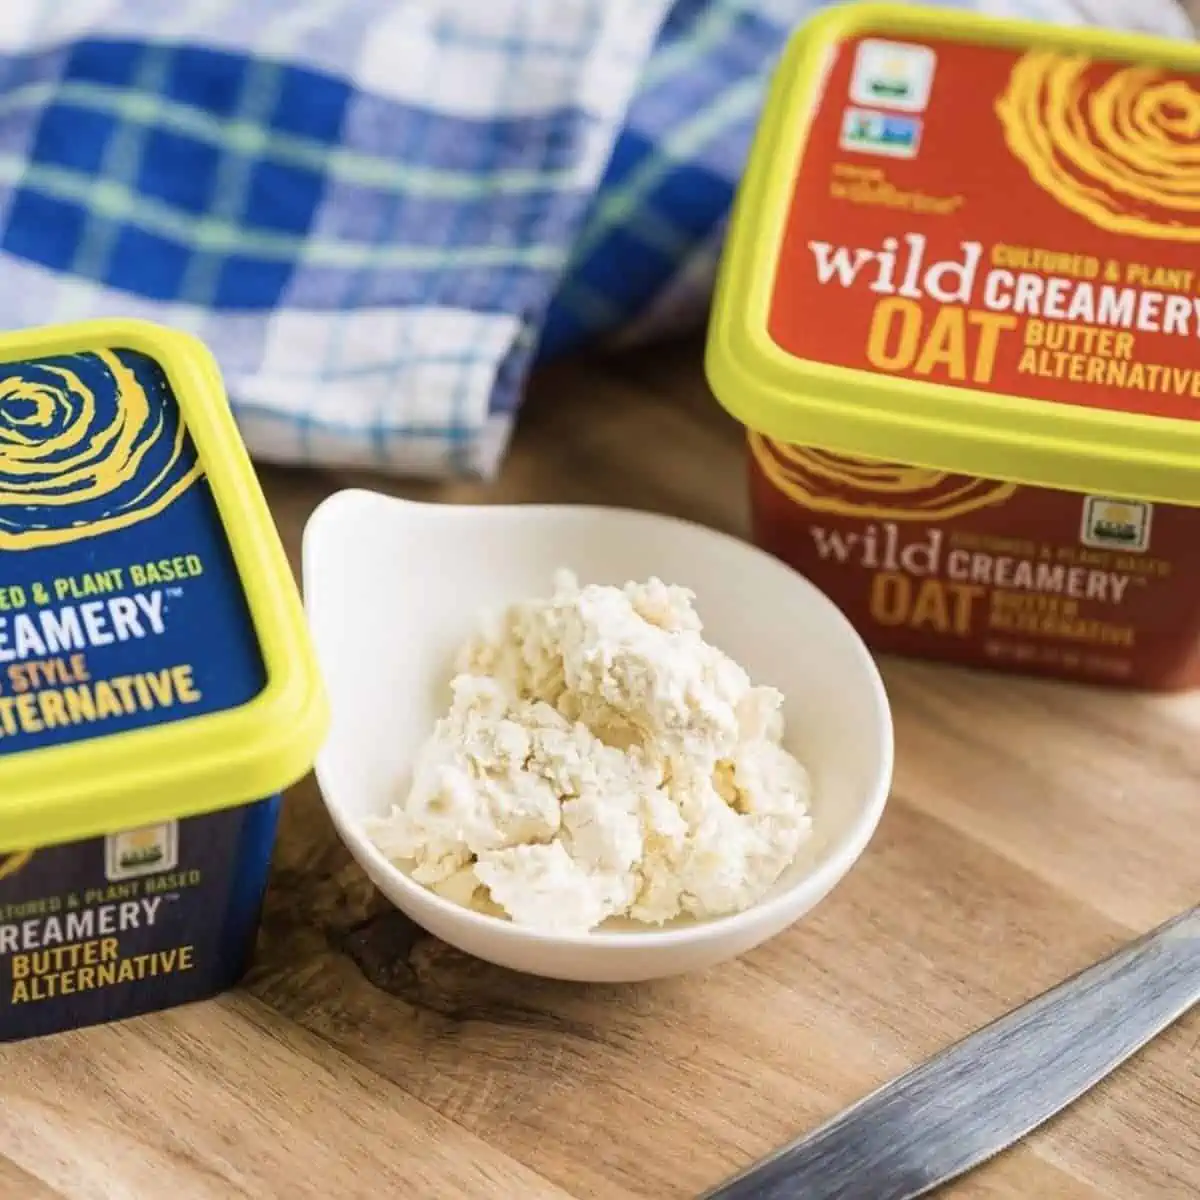 Two tubs of Wild Creamery's oat butter alternative. 